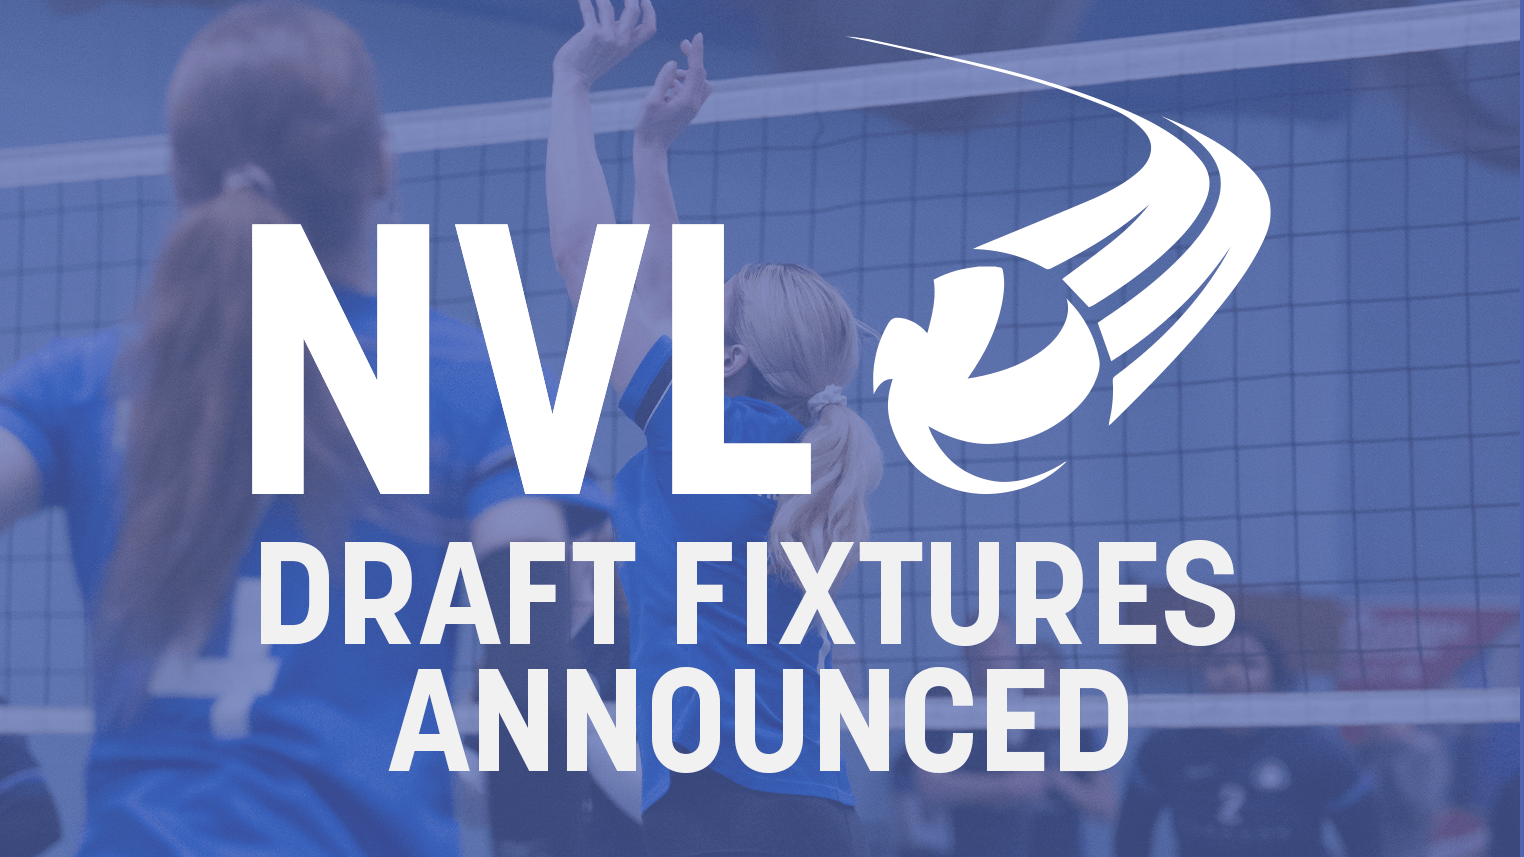 NVL draft fixtures announced